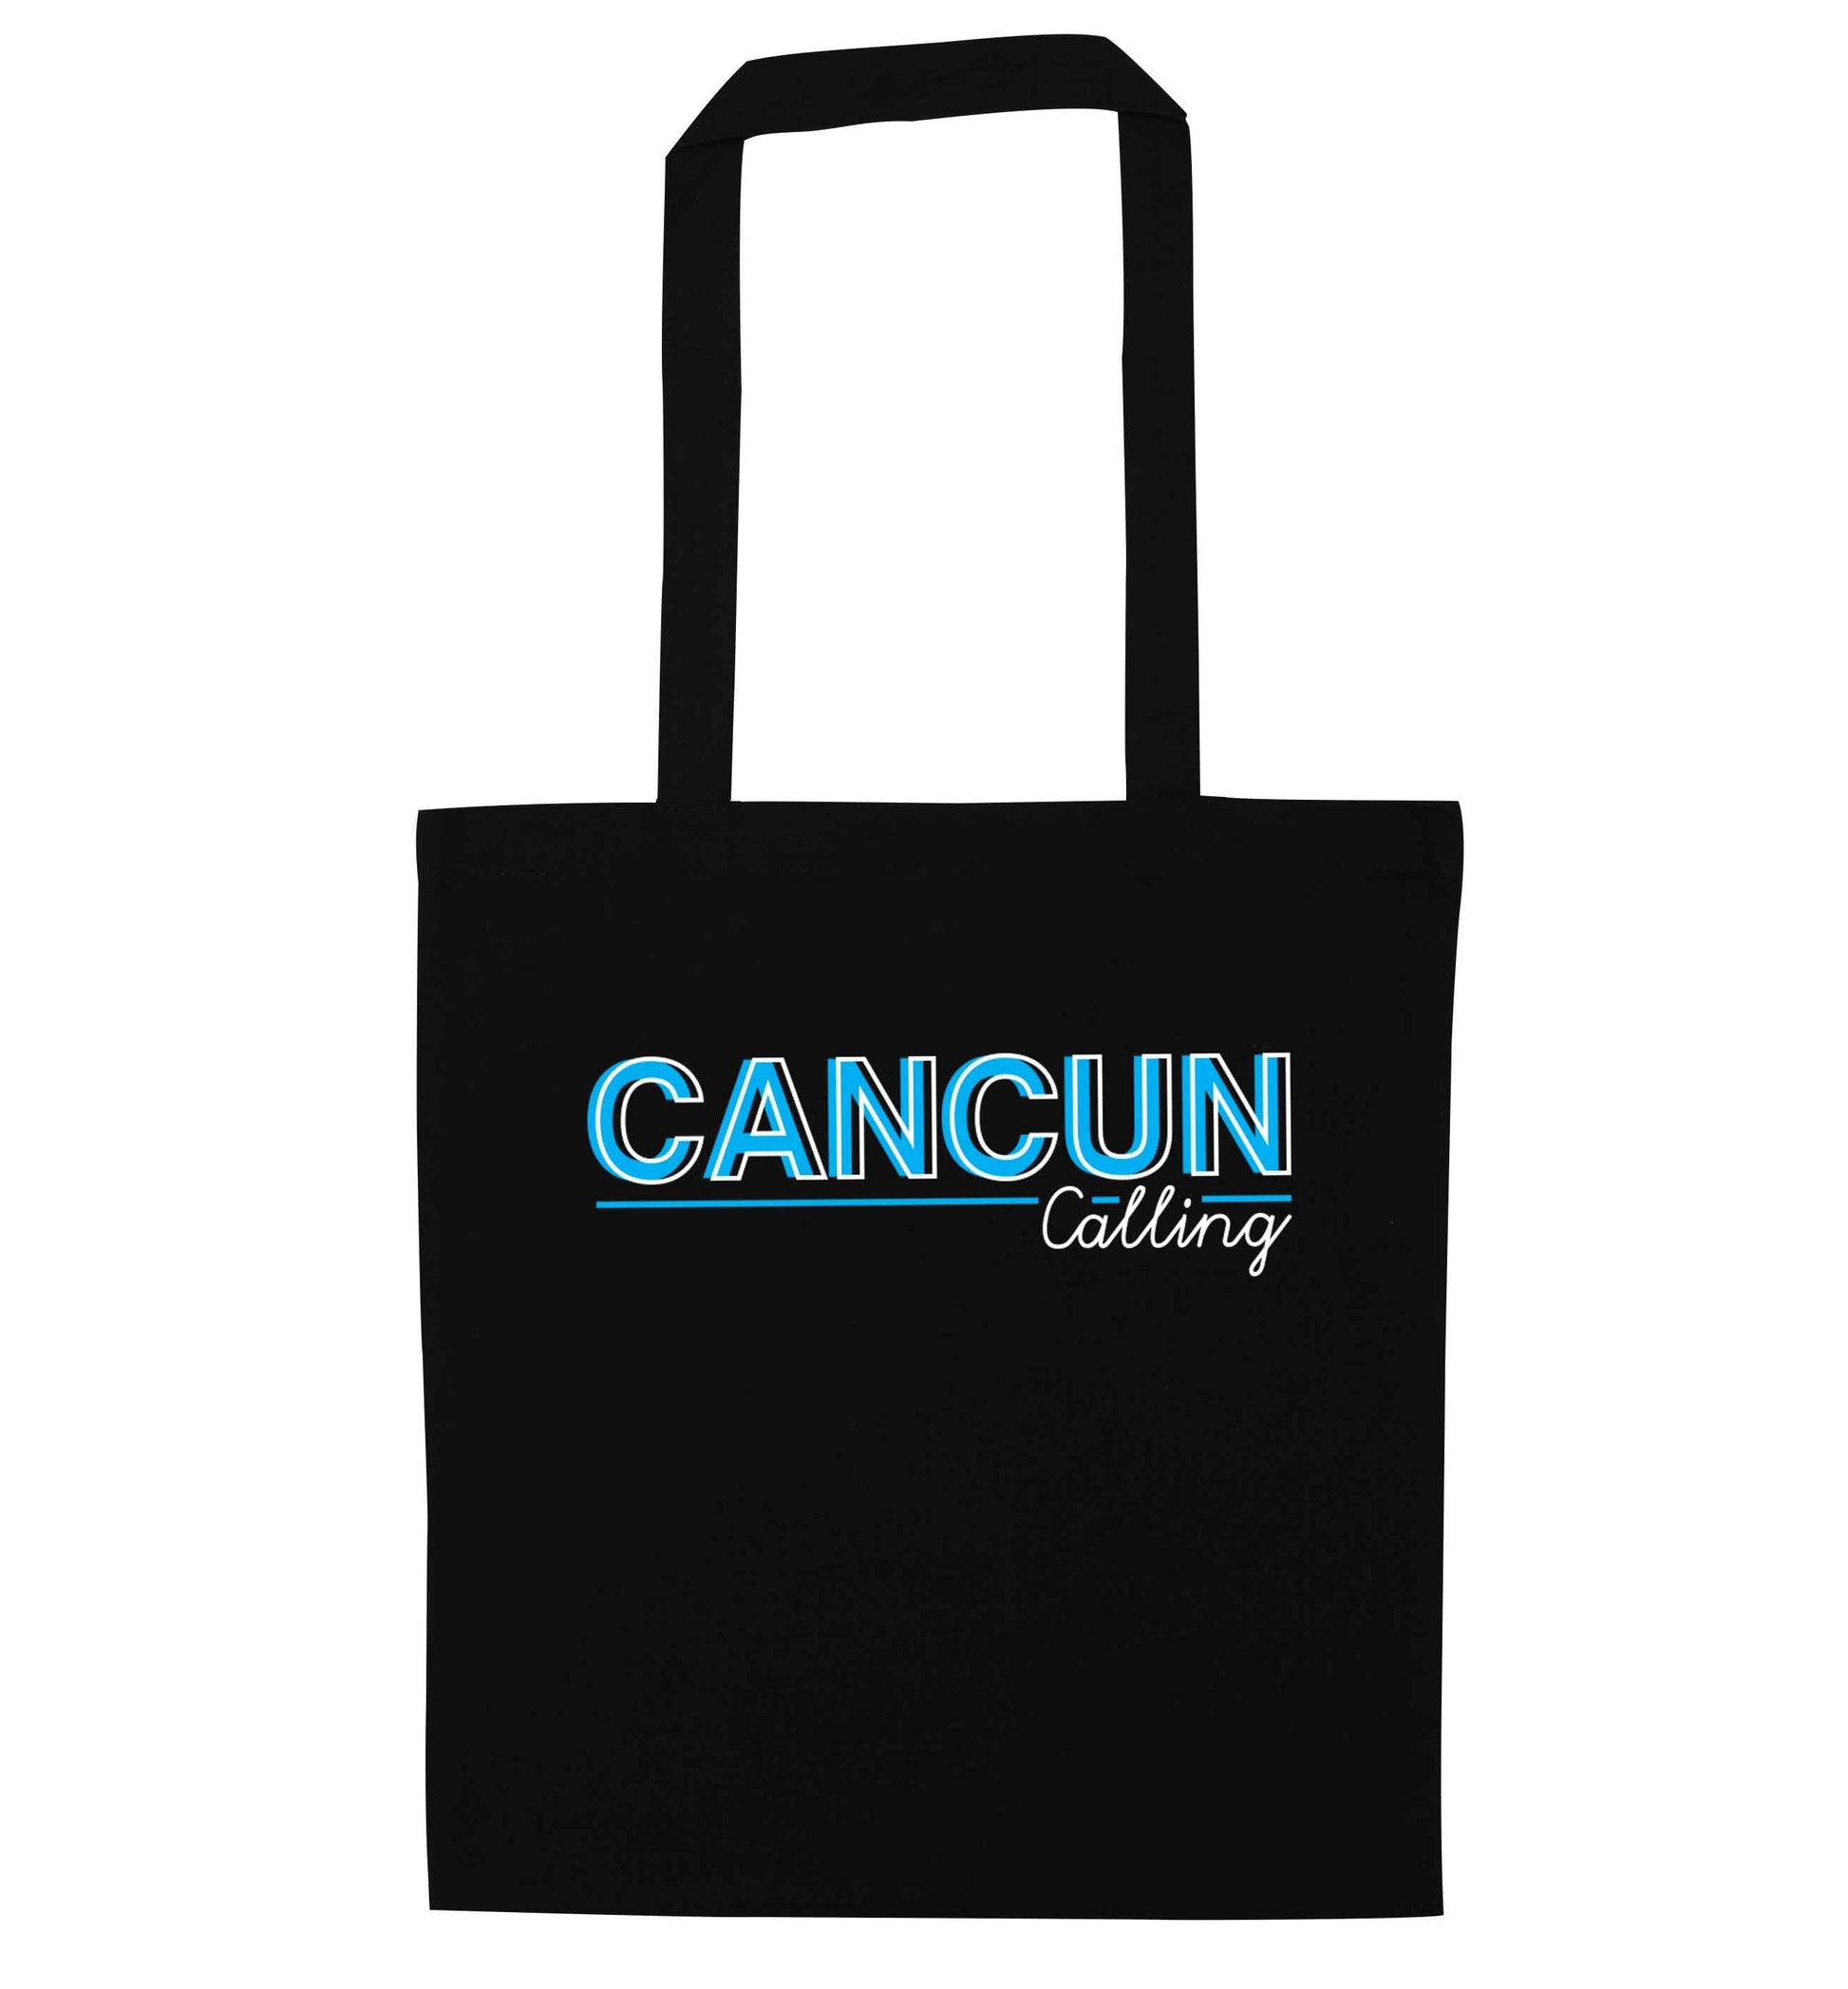 Cancun calling black tote bag